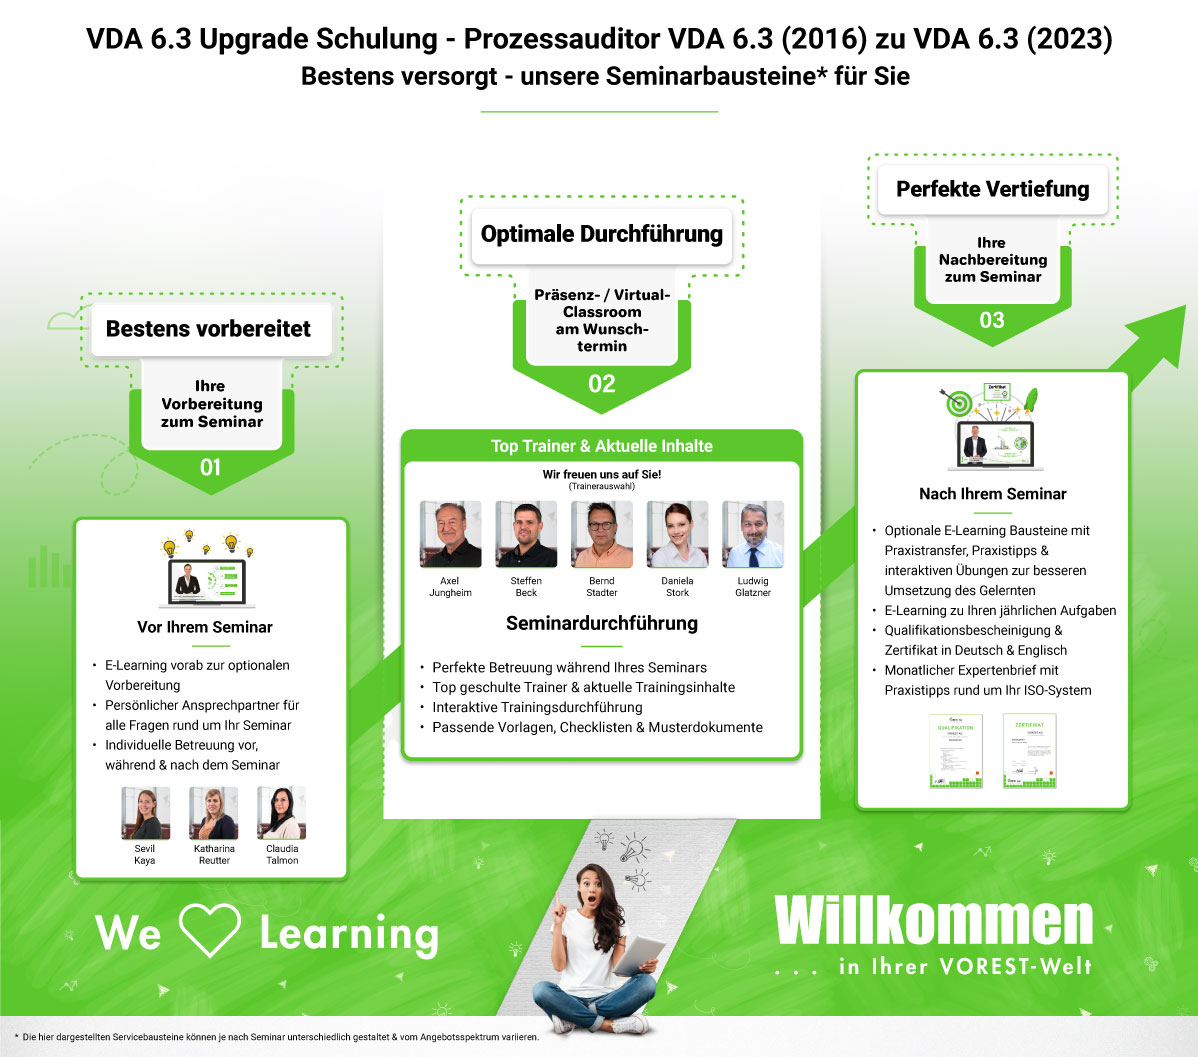 VDA 6.3 Upgrade Schulung - Prozessauditor VDA 6.3 (2016) zu VDA 6.3 (2023)